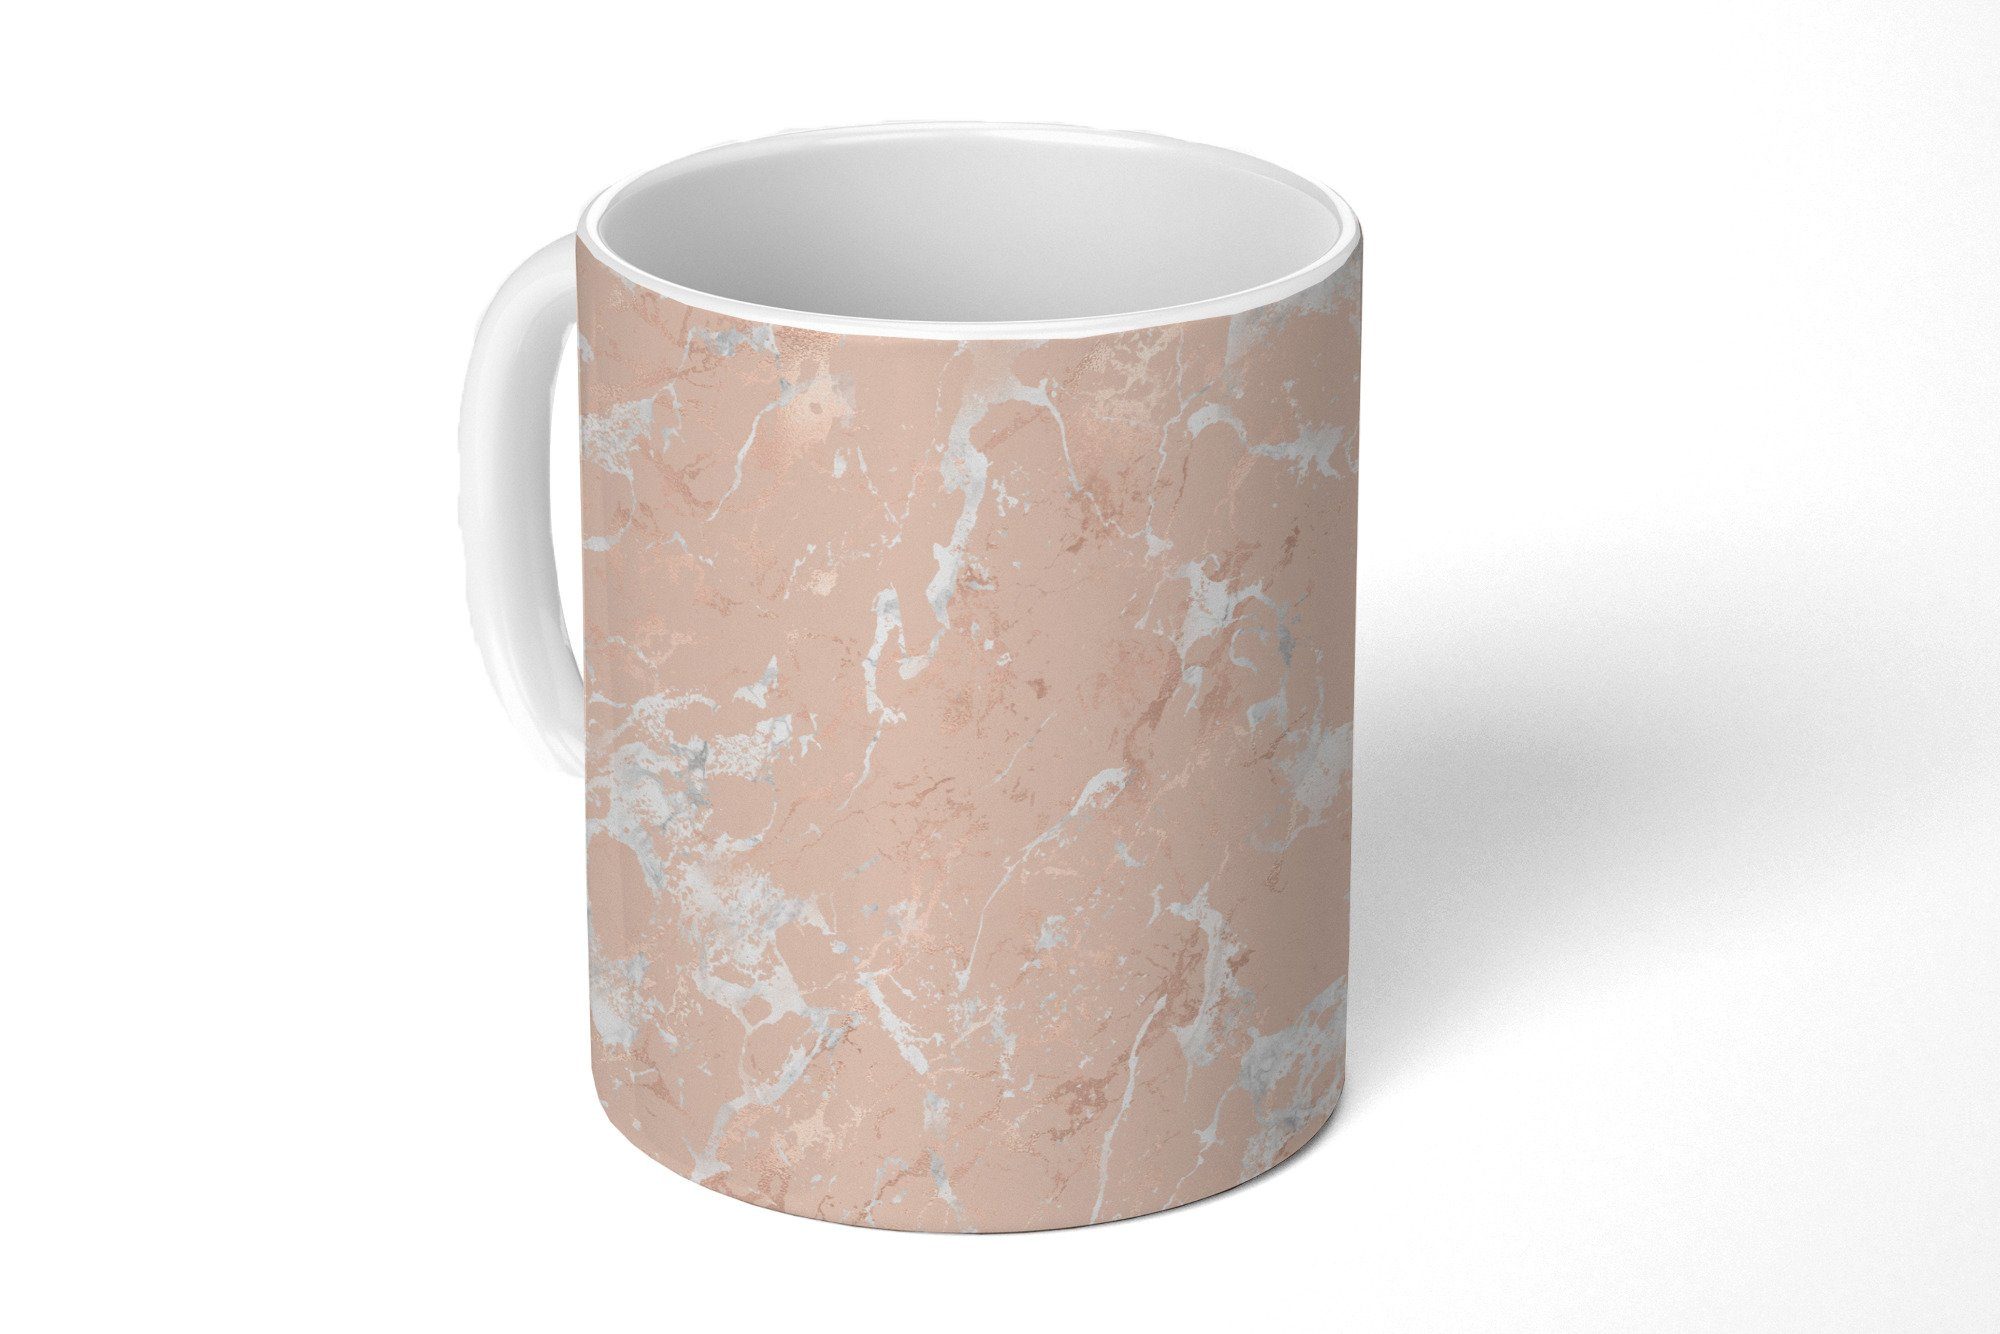 Kaffeetassen, MuchoWow Marmor Teetasse, - Keramik, Luxus, - Roségold - Muster Becher, Tasse Teetasse, Geschenk